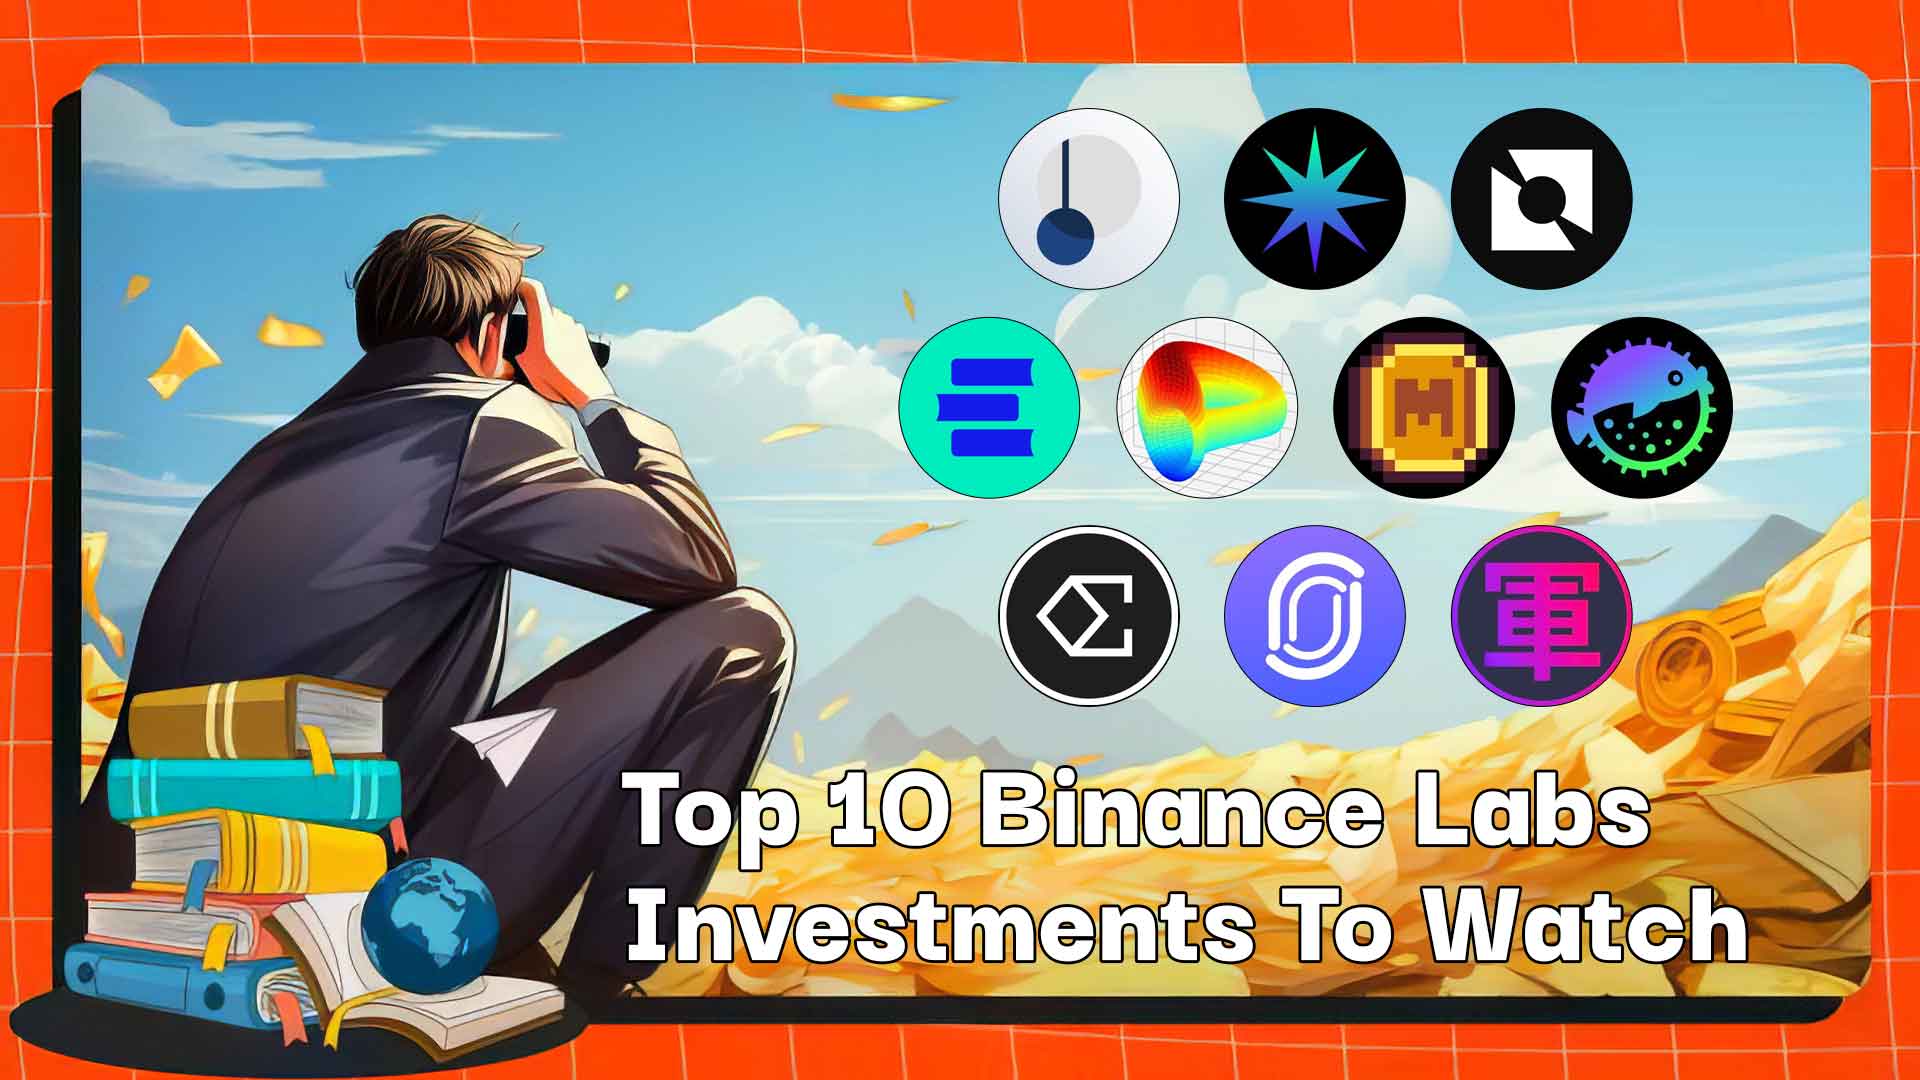 Os 10 principais investimentos da Binance Labs para observar